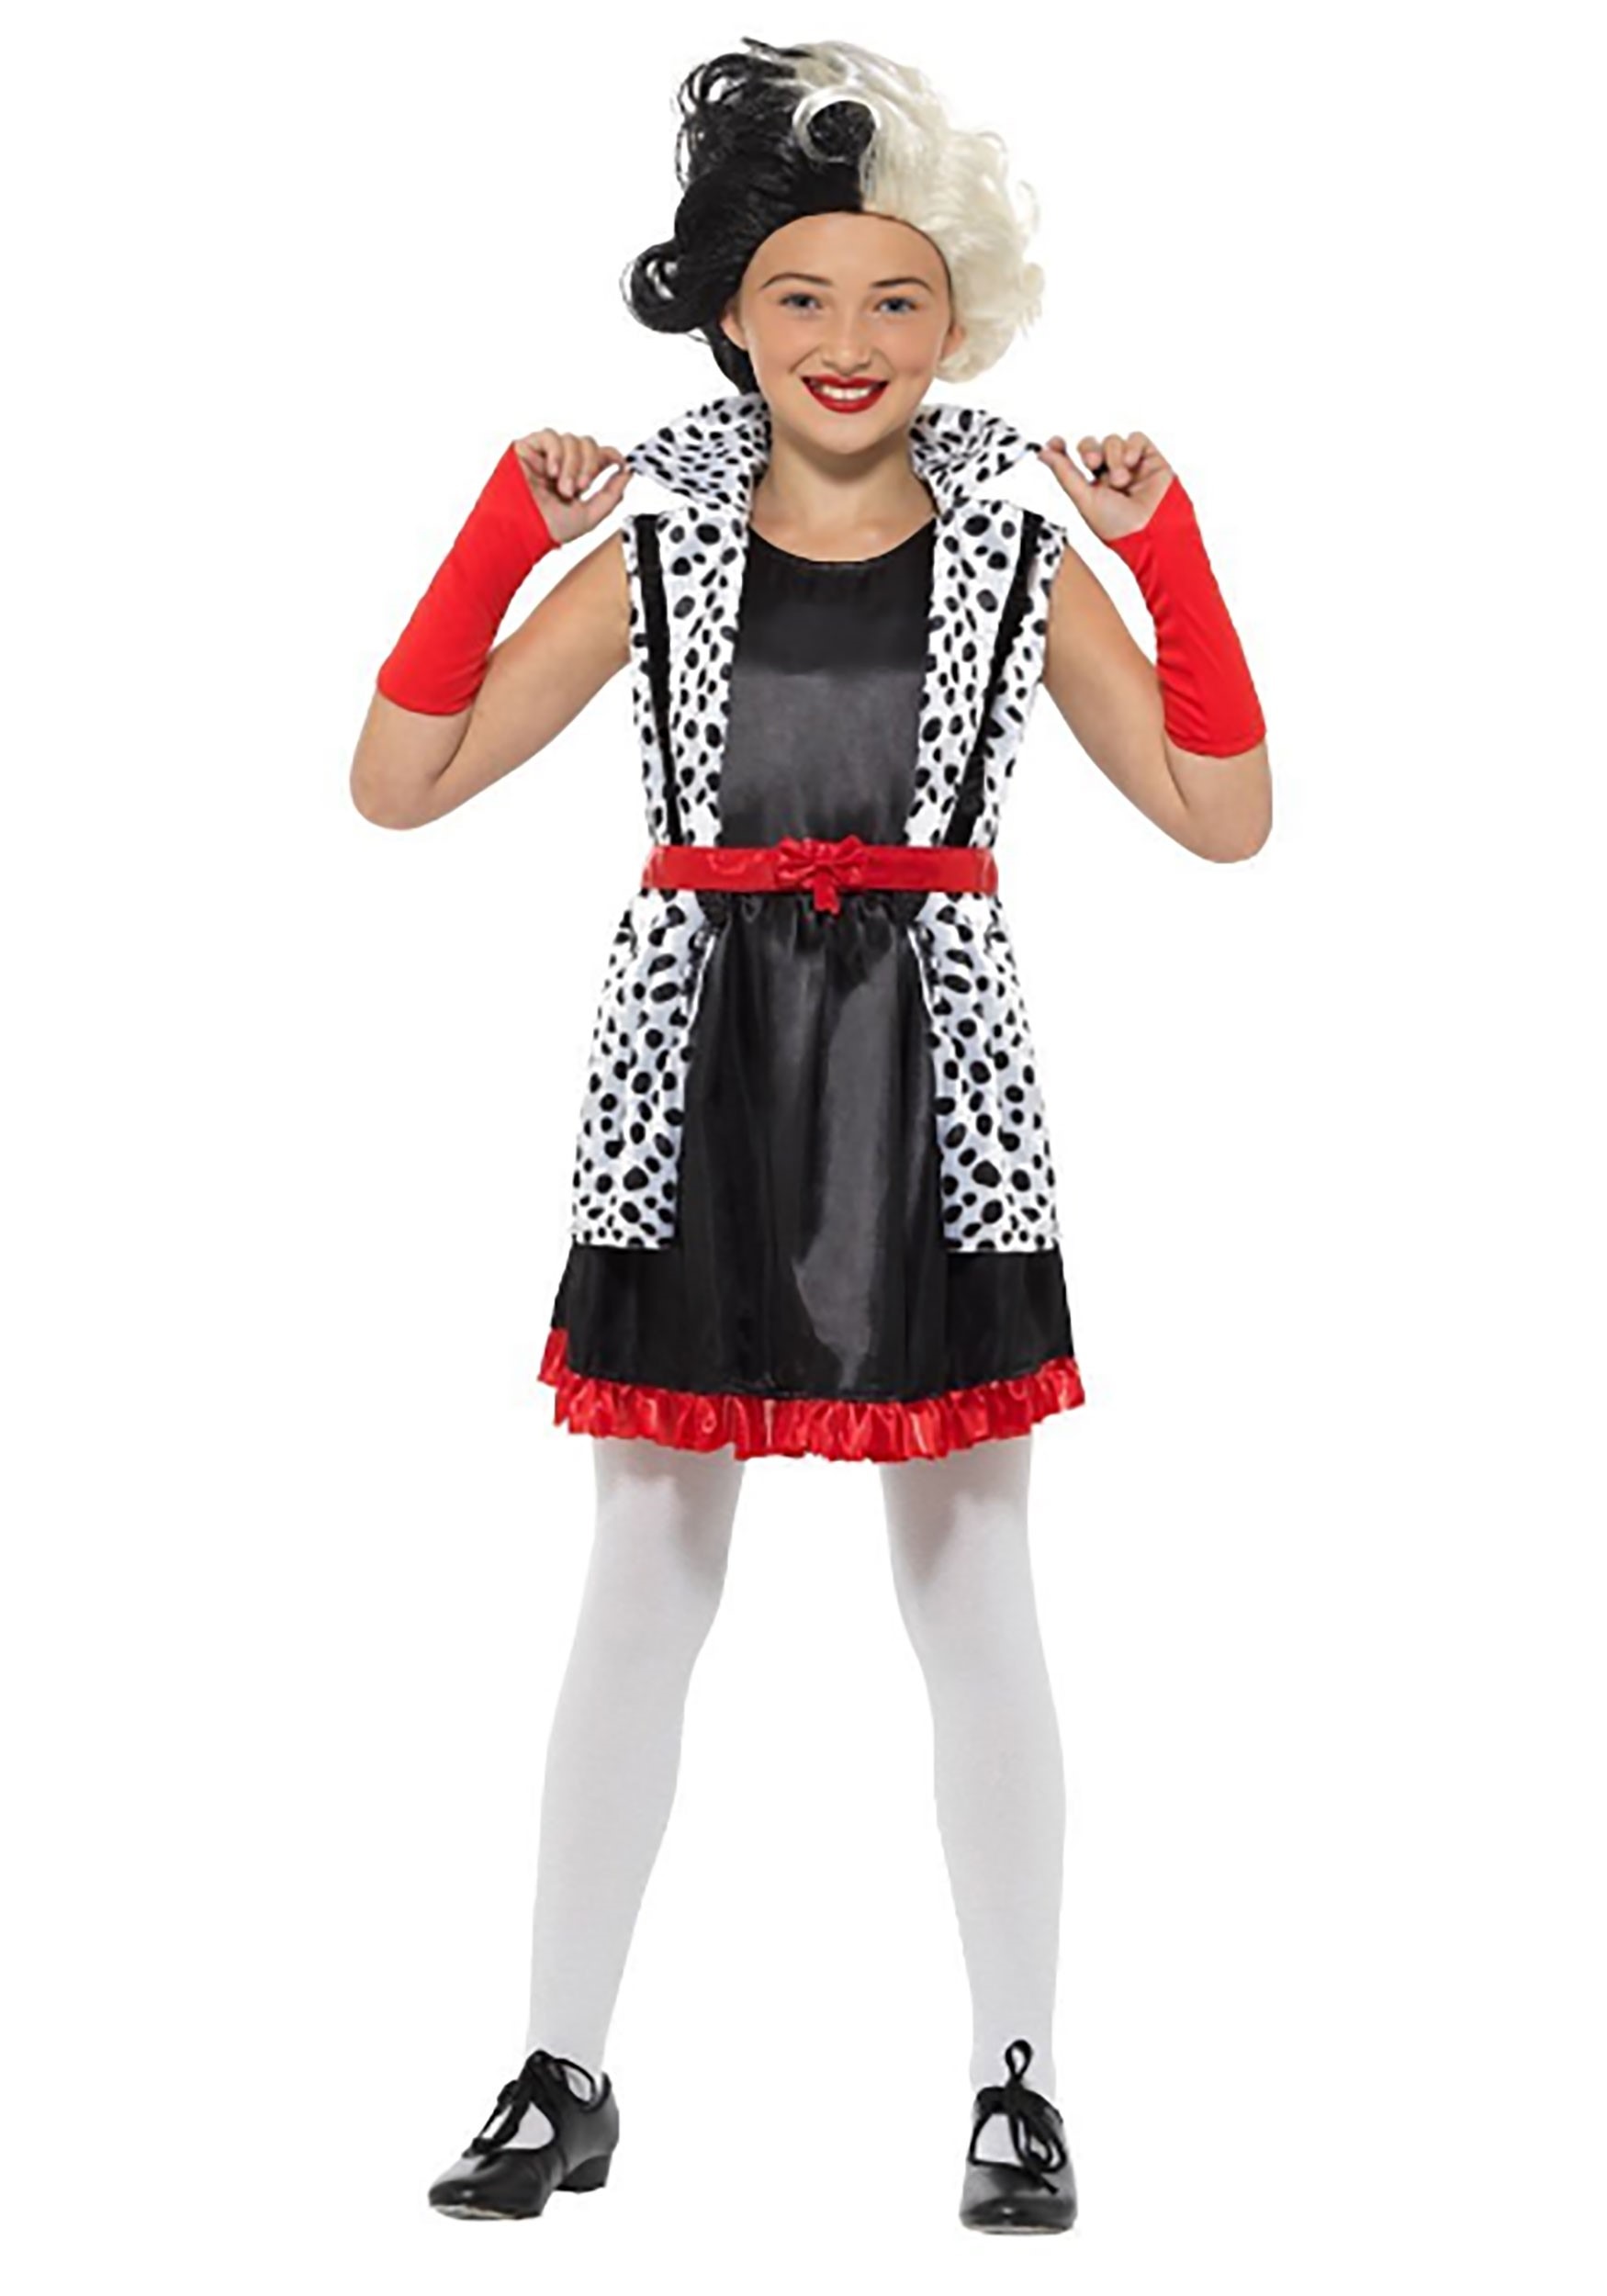 Photos - Fancy Dress Smiffys Girl's Evil Madame Costume Black/Red/White SM49696